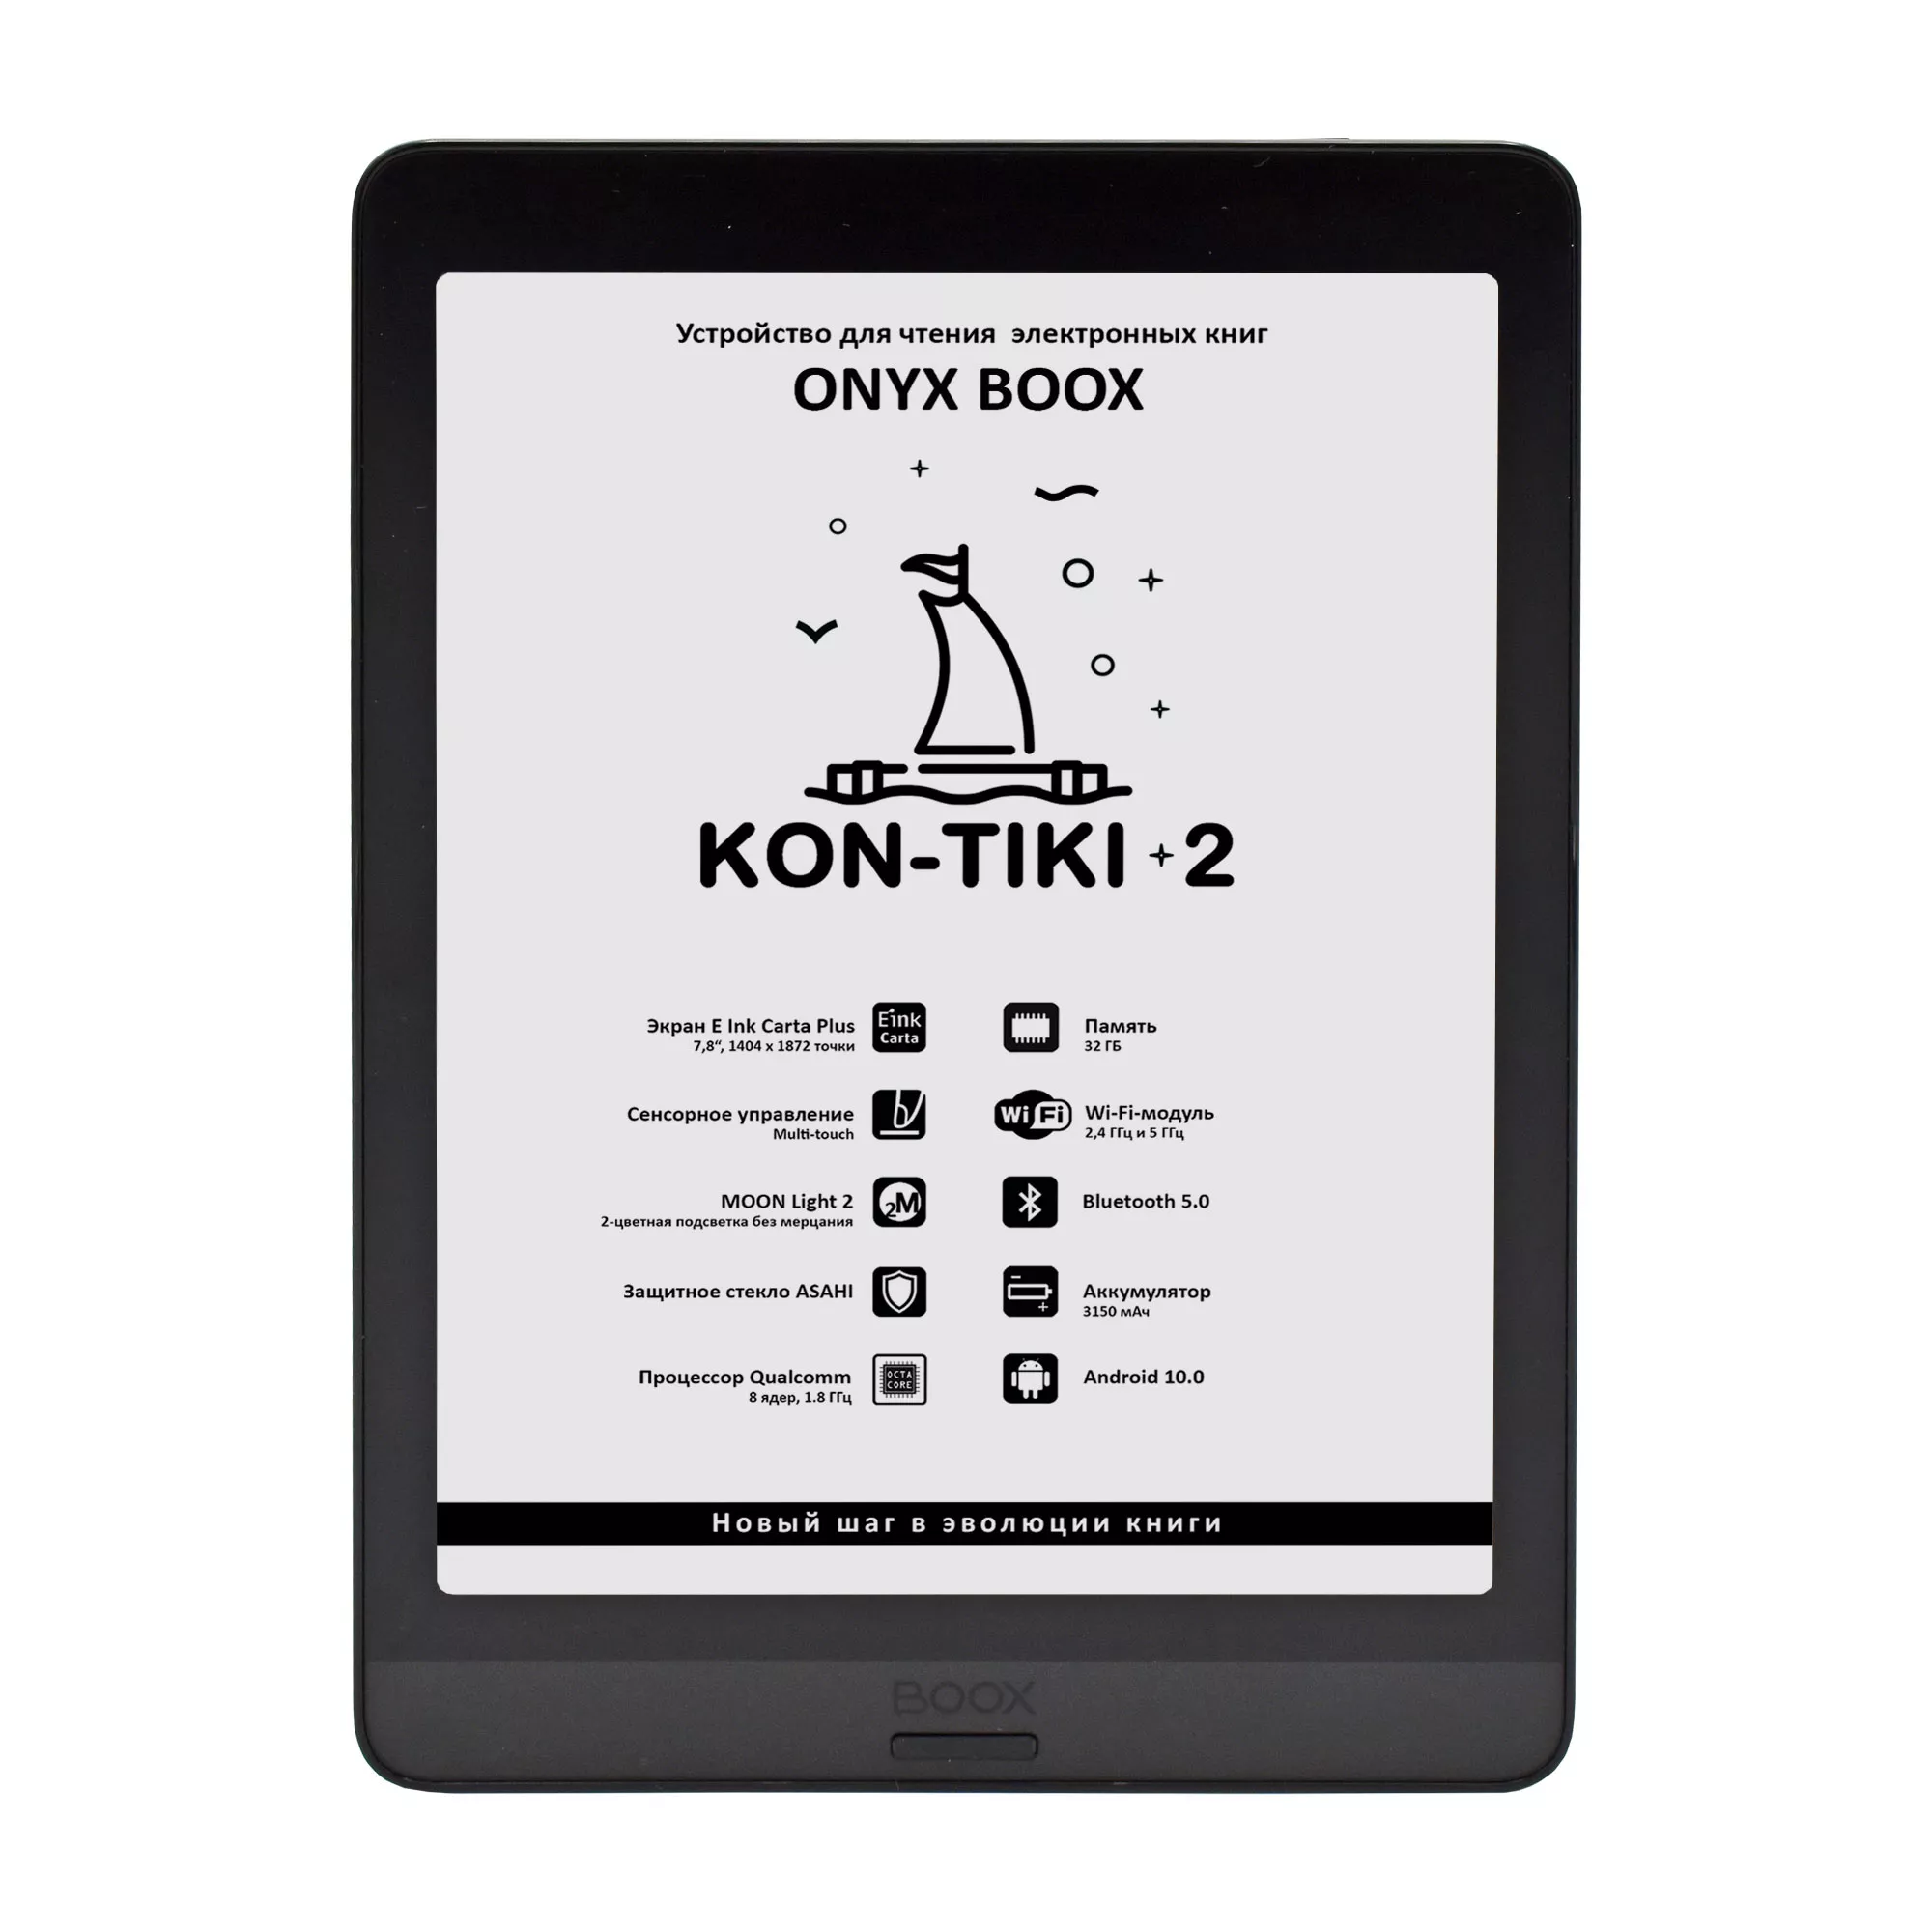 ONYX BOOX выпустила обновлённую электронную книгу Kon-Tiki 2 